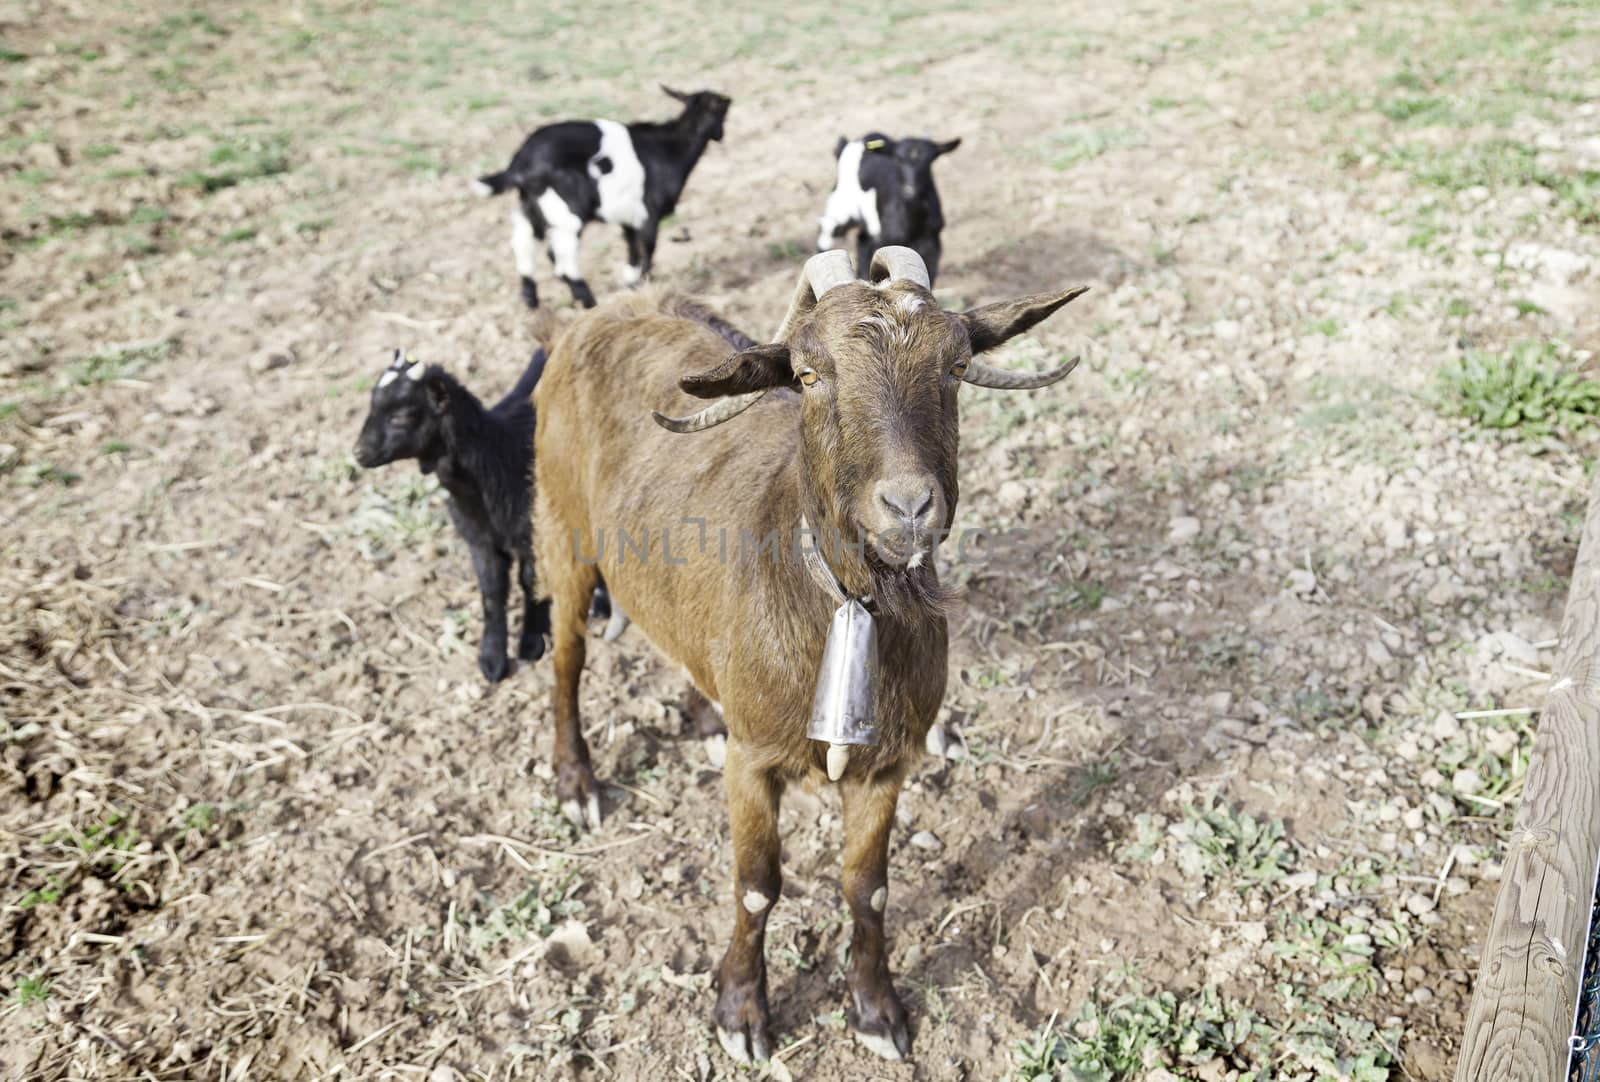 Goats on a farm eating by esebene